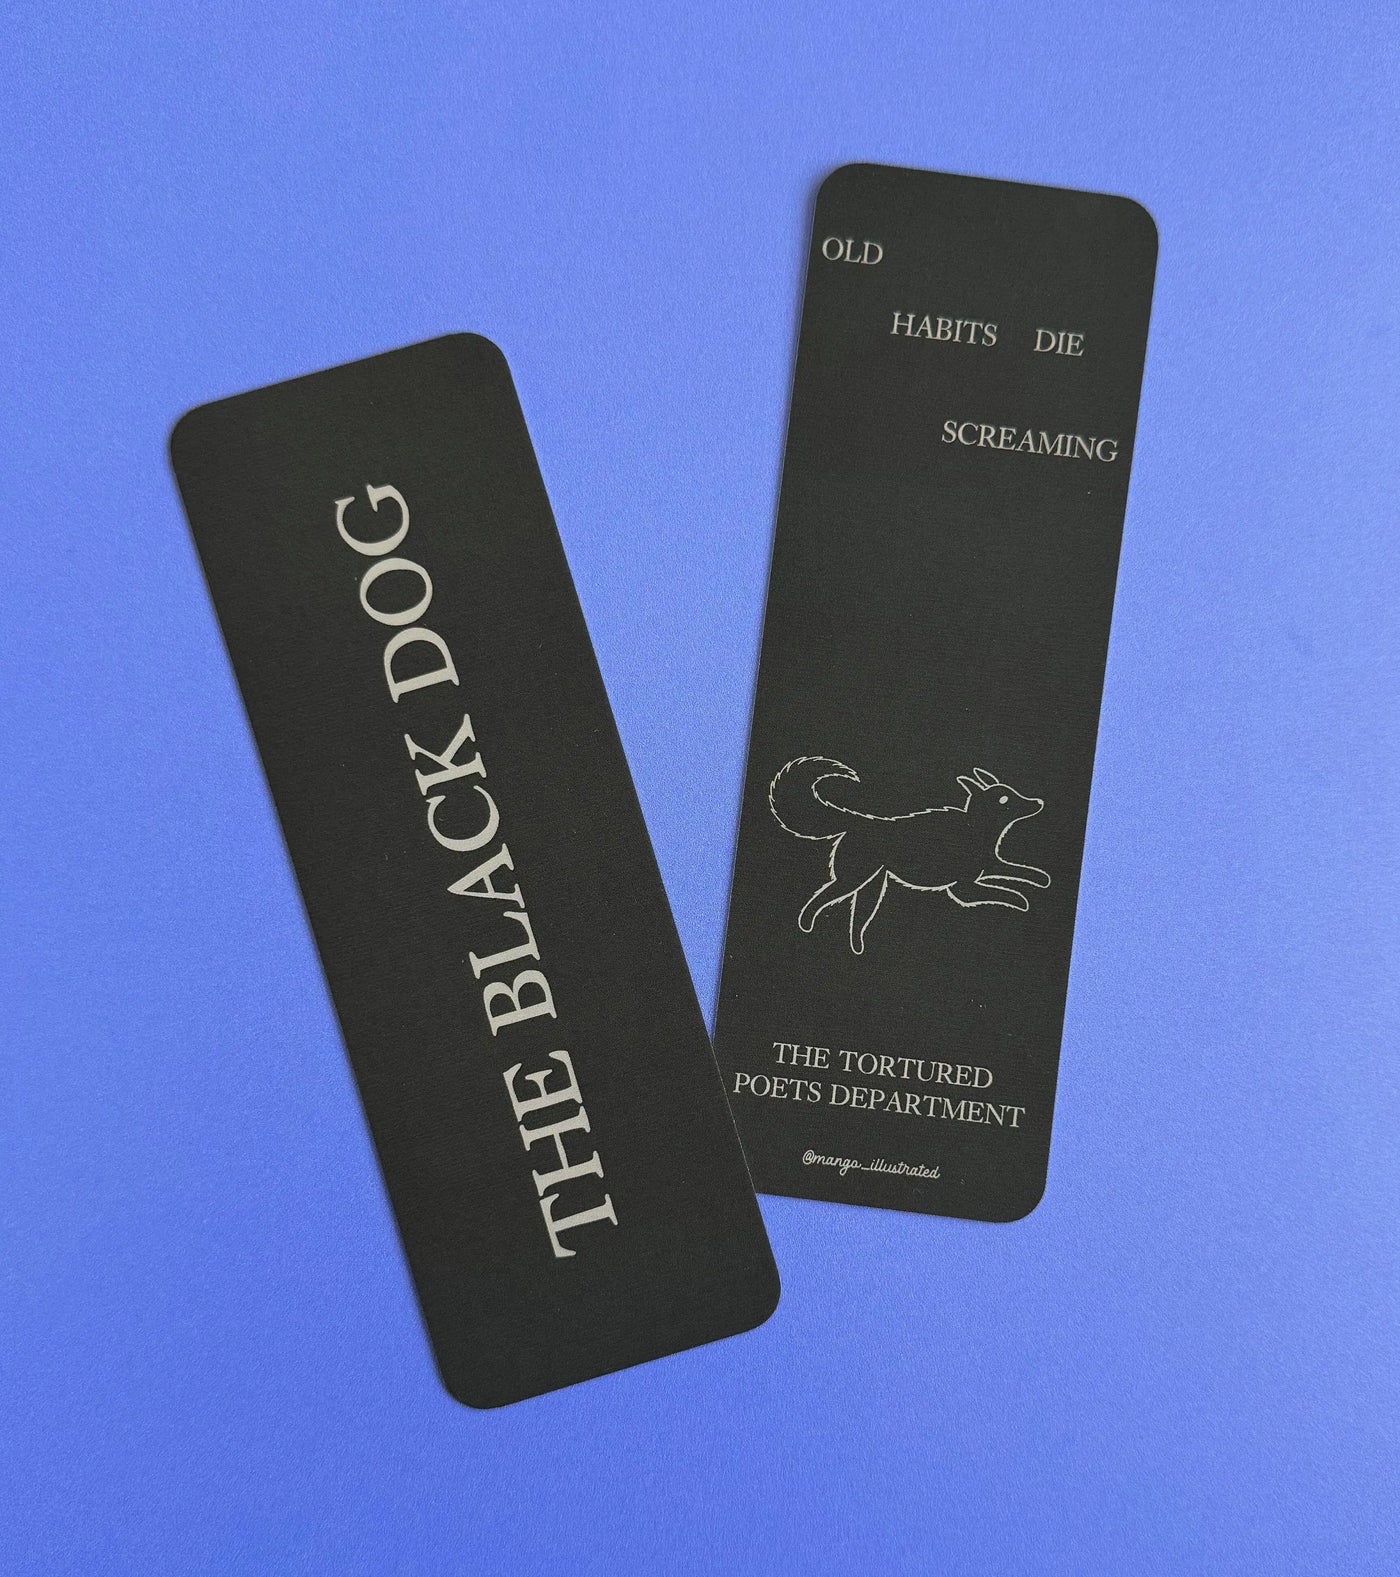 The Black Dog bookmark MangoIllustrated